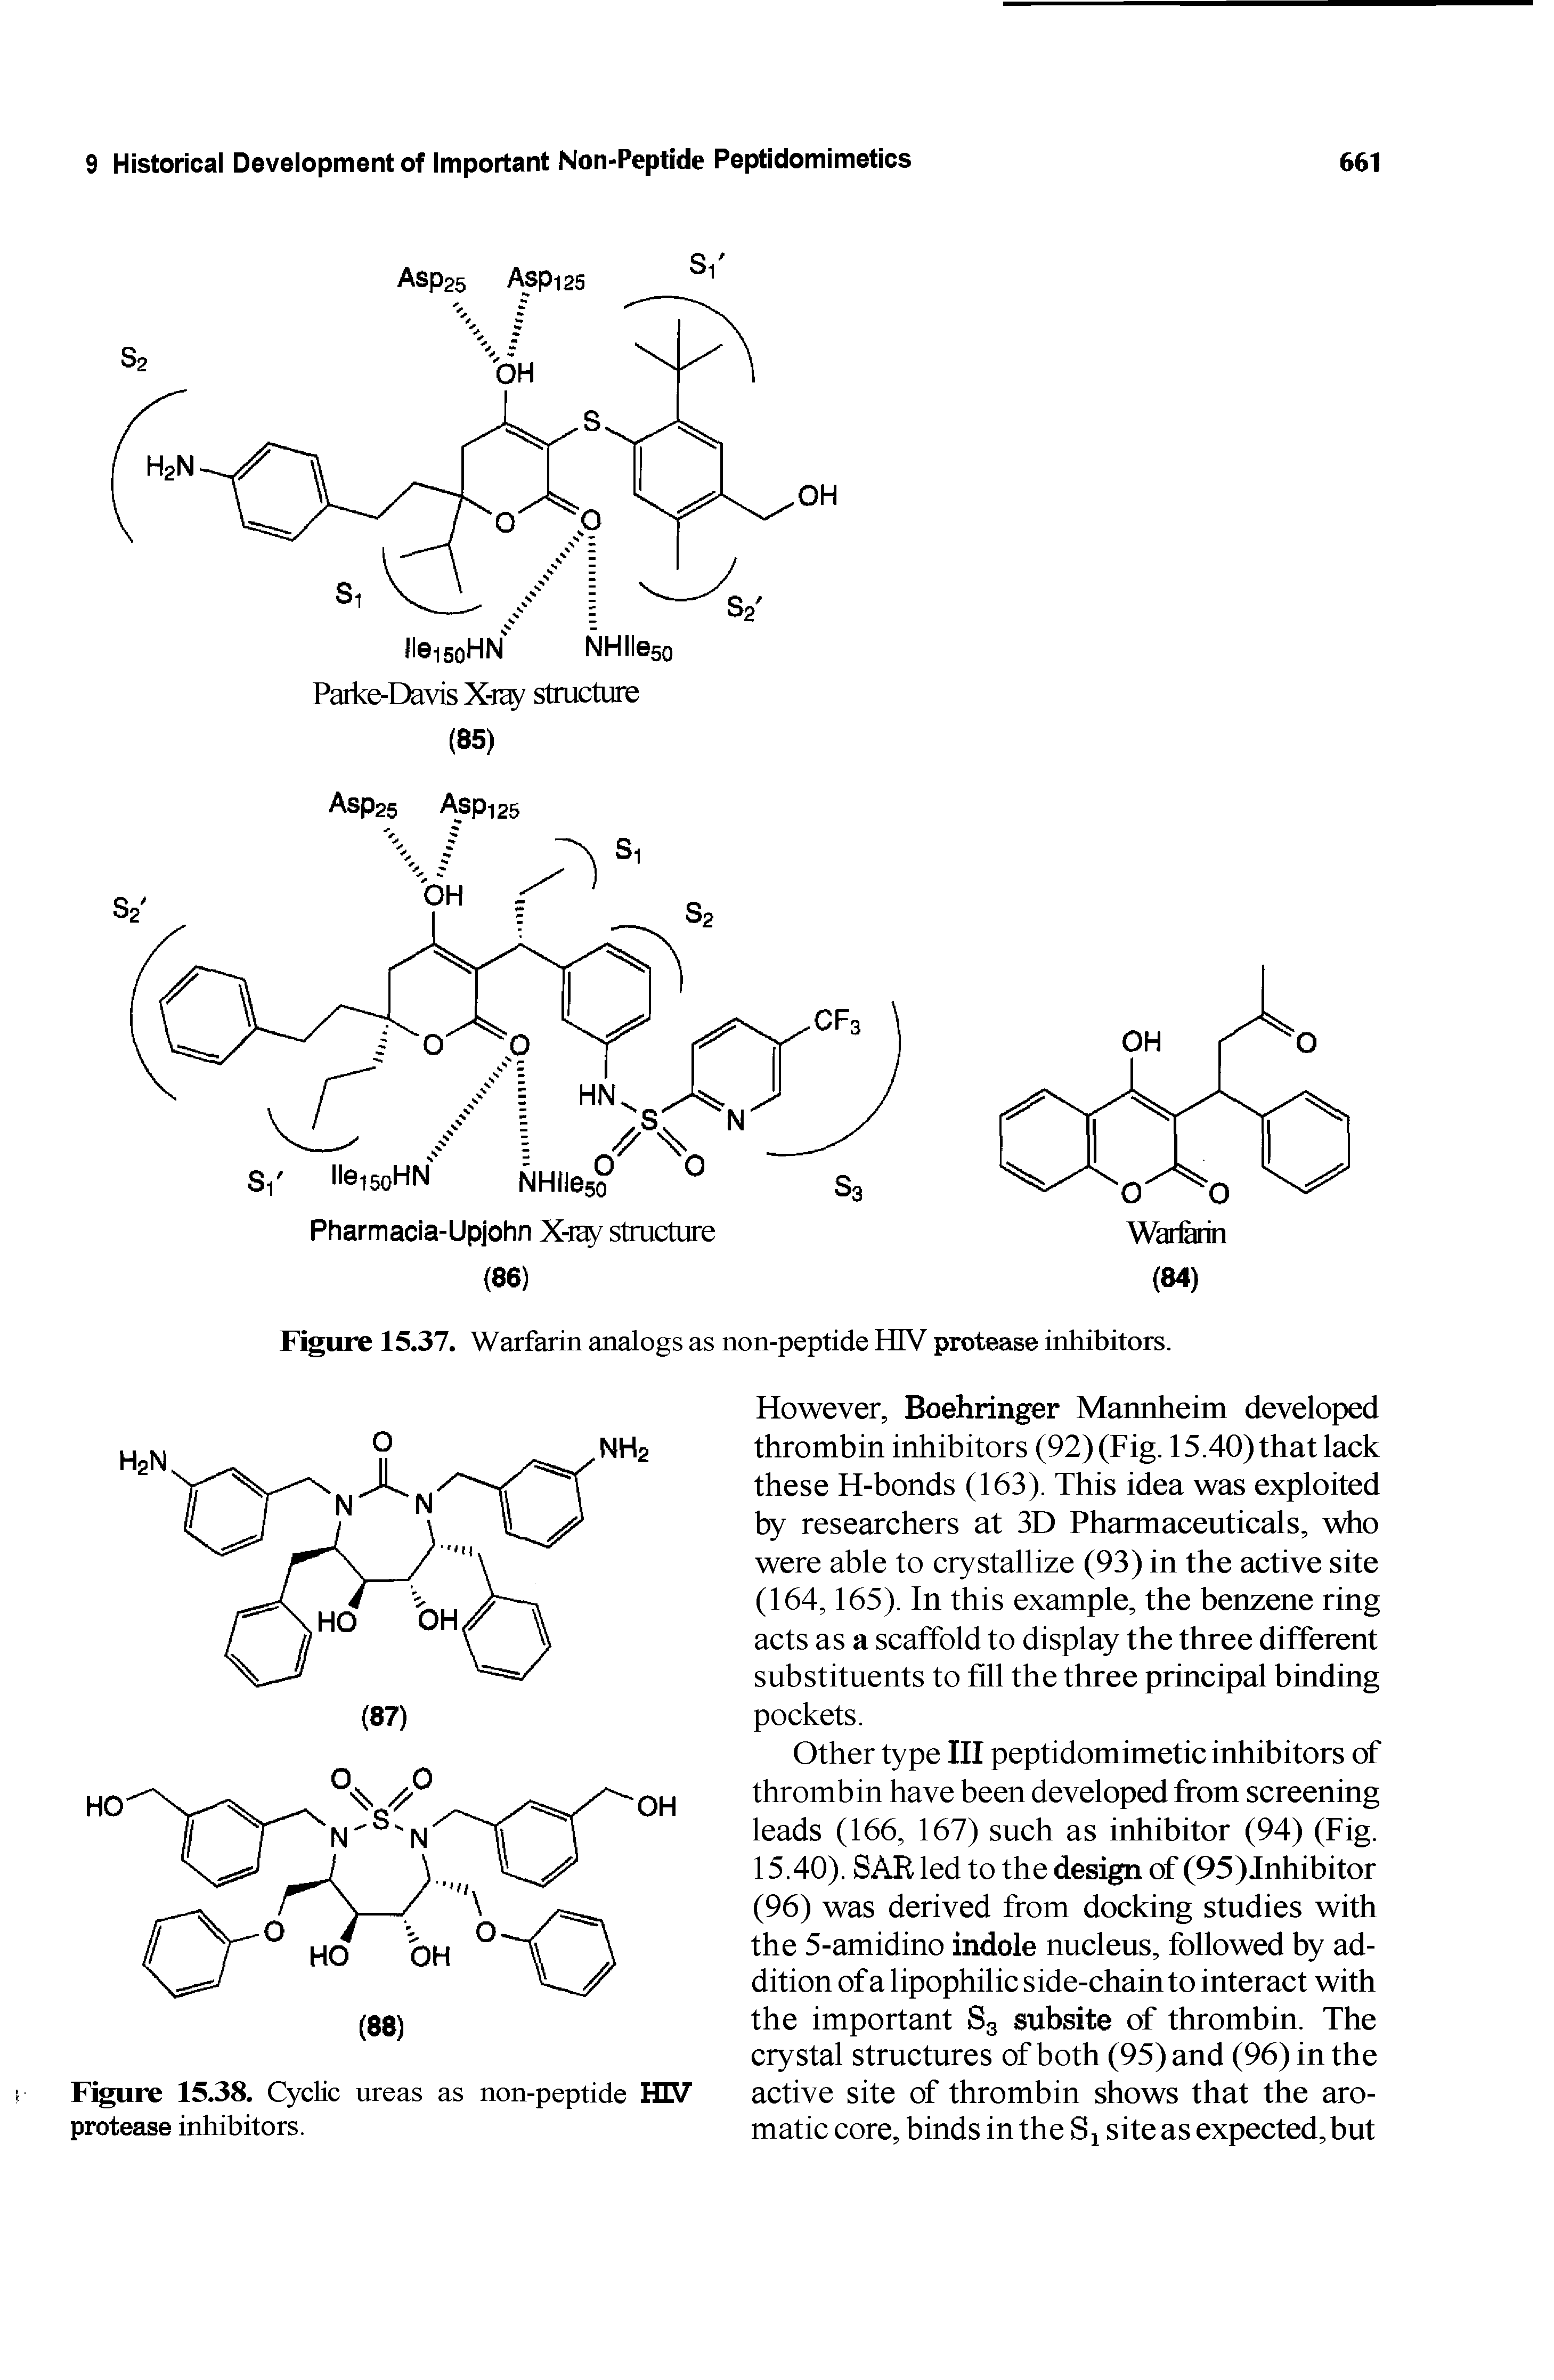 Figure 15.38. Cyclic ureas as non-peptide HIV protease inhibitors.